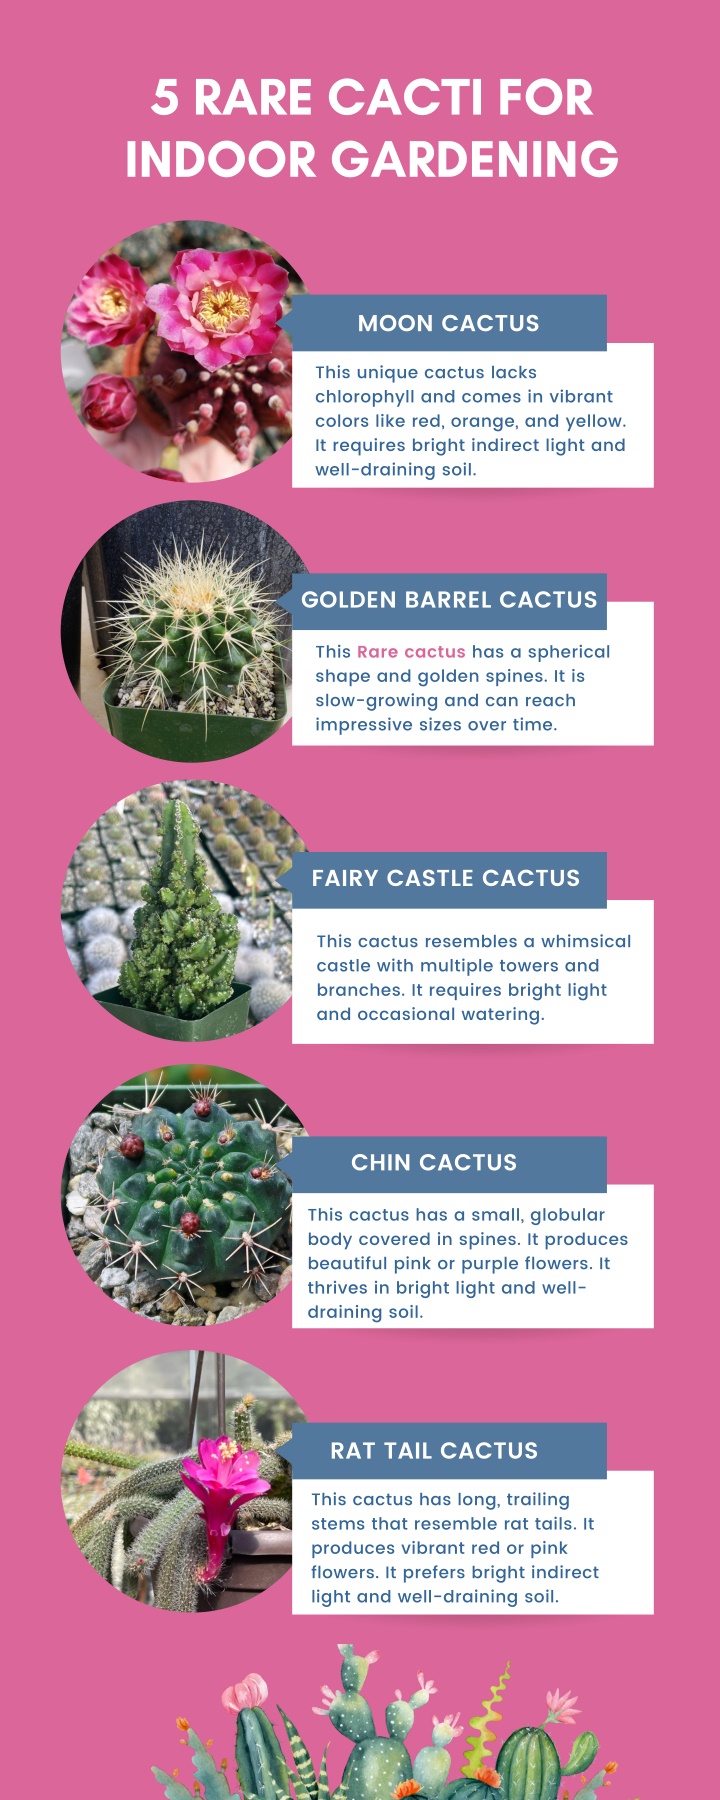 5 rare cacti for indoor gardening